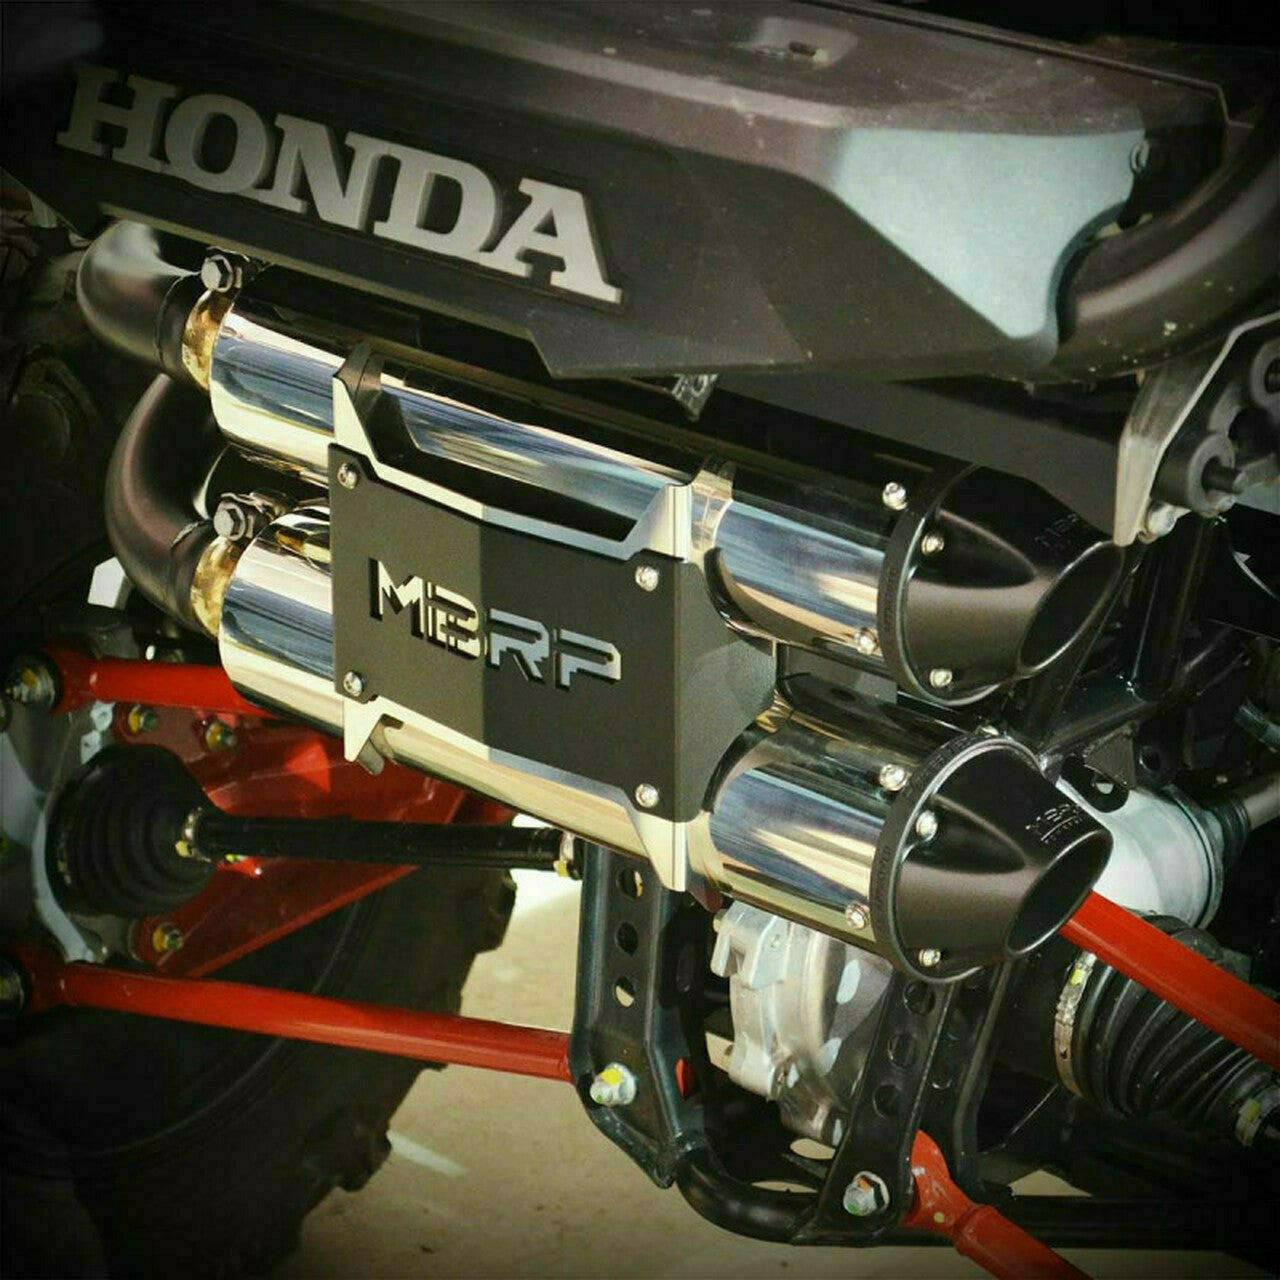 MBRP Honda Talon Performance Series Slip On Exhaust